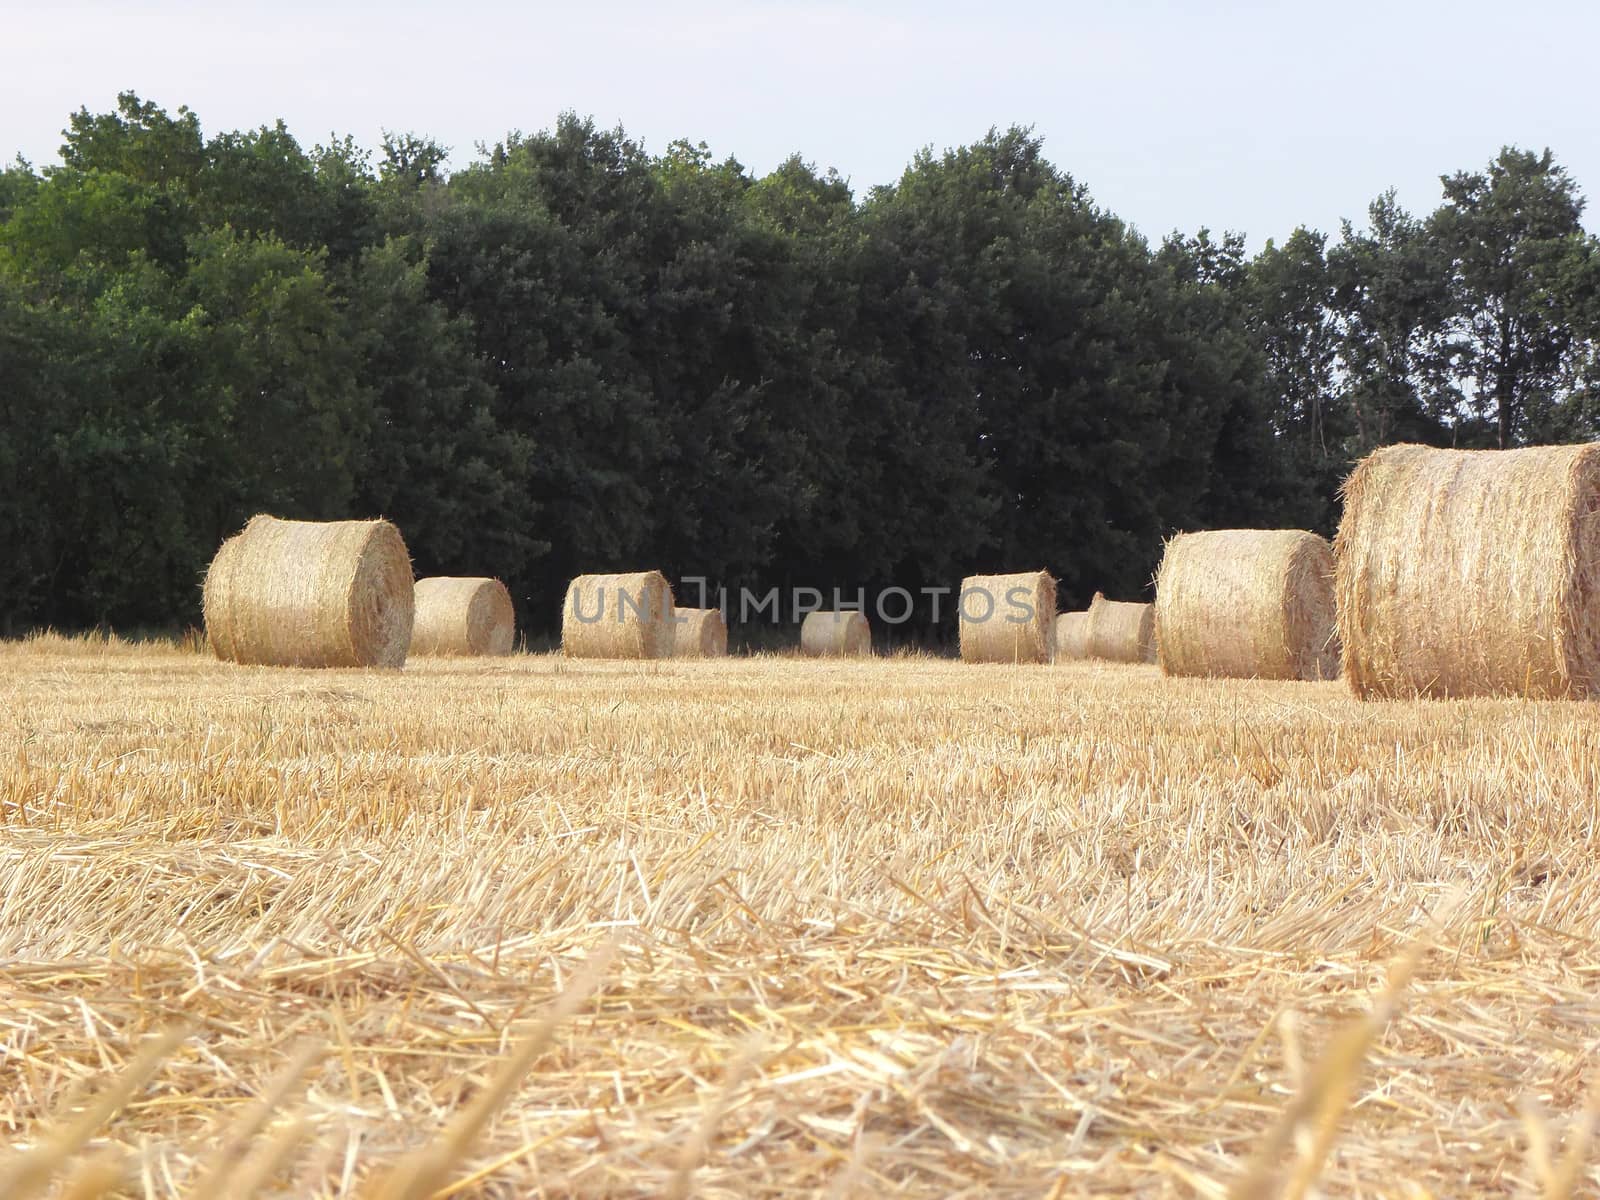 Straw bales of stubble.  summer, harvest, field